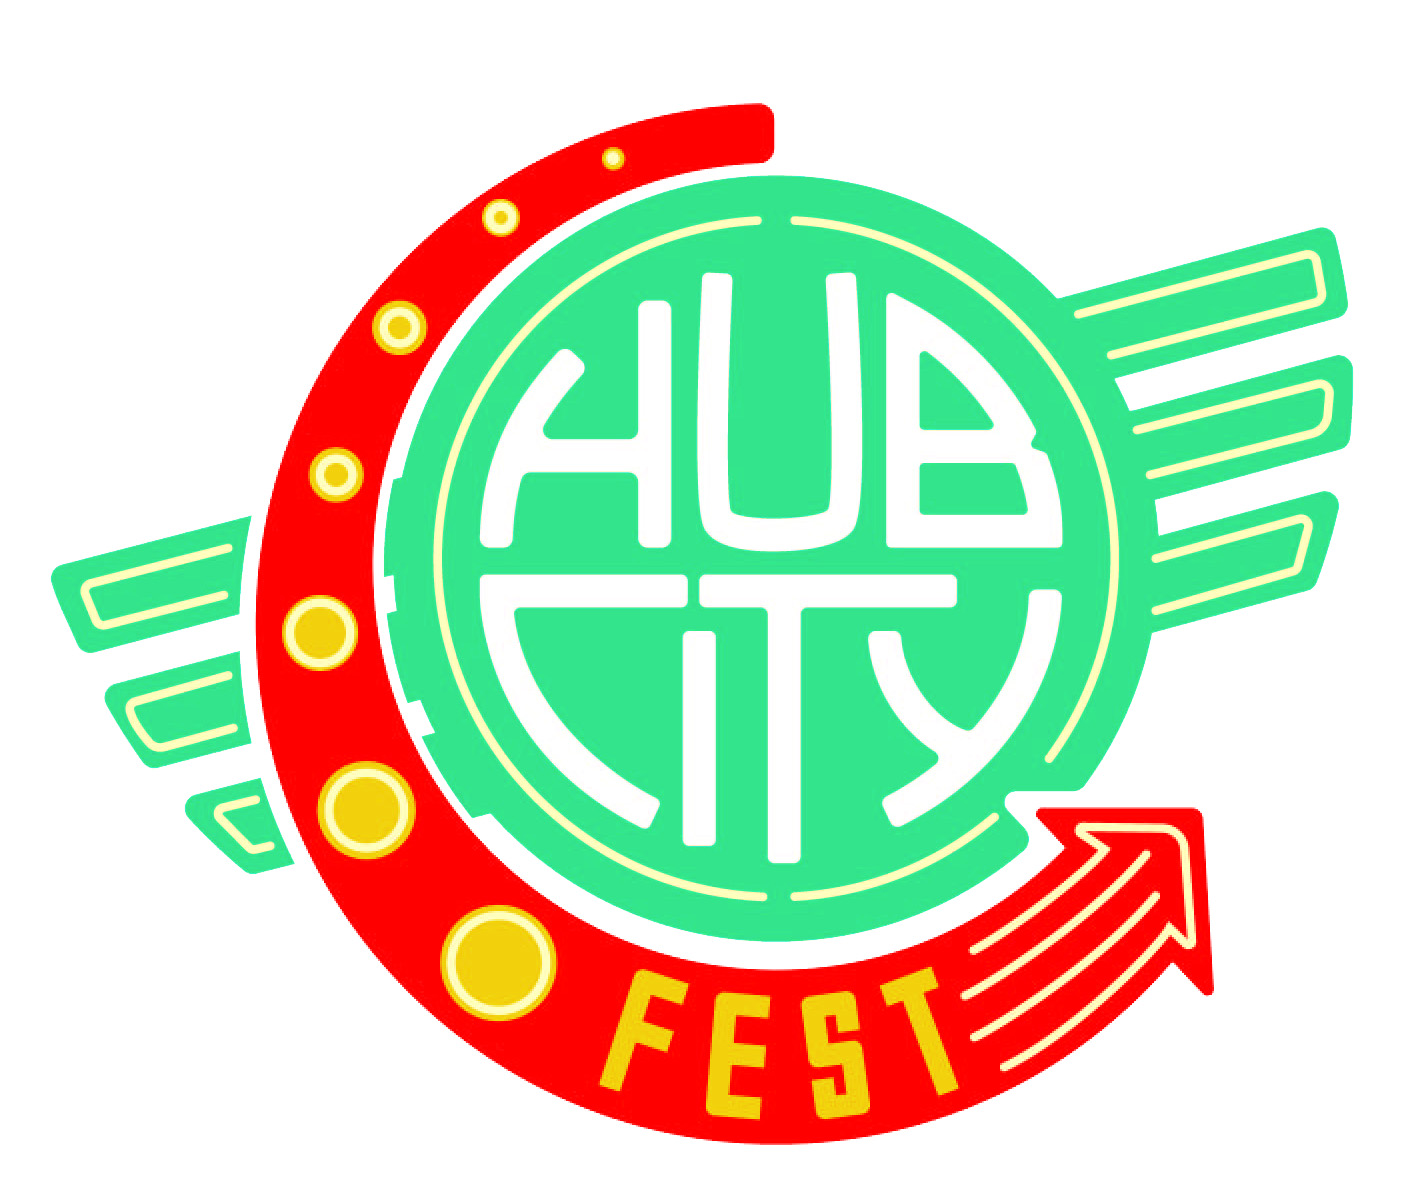 Hub City Fest Logo